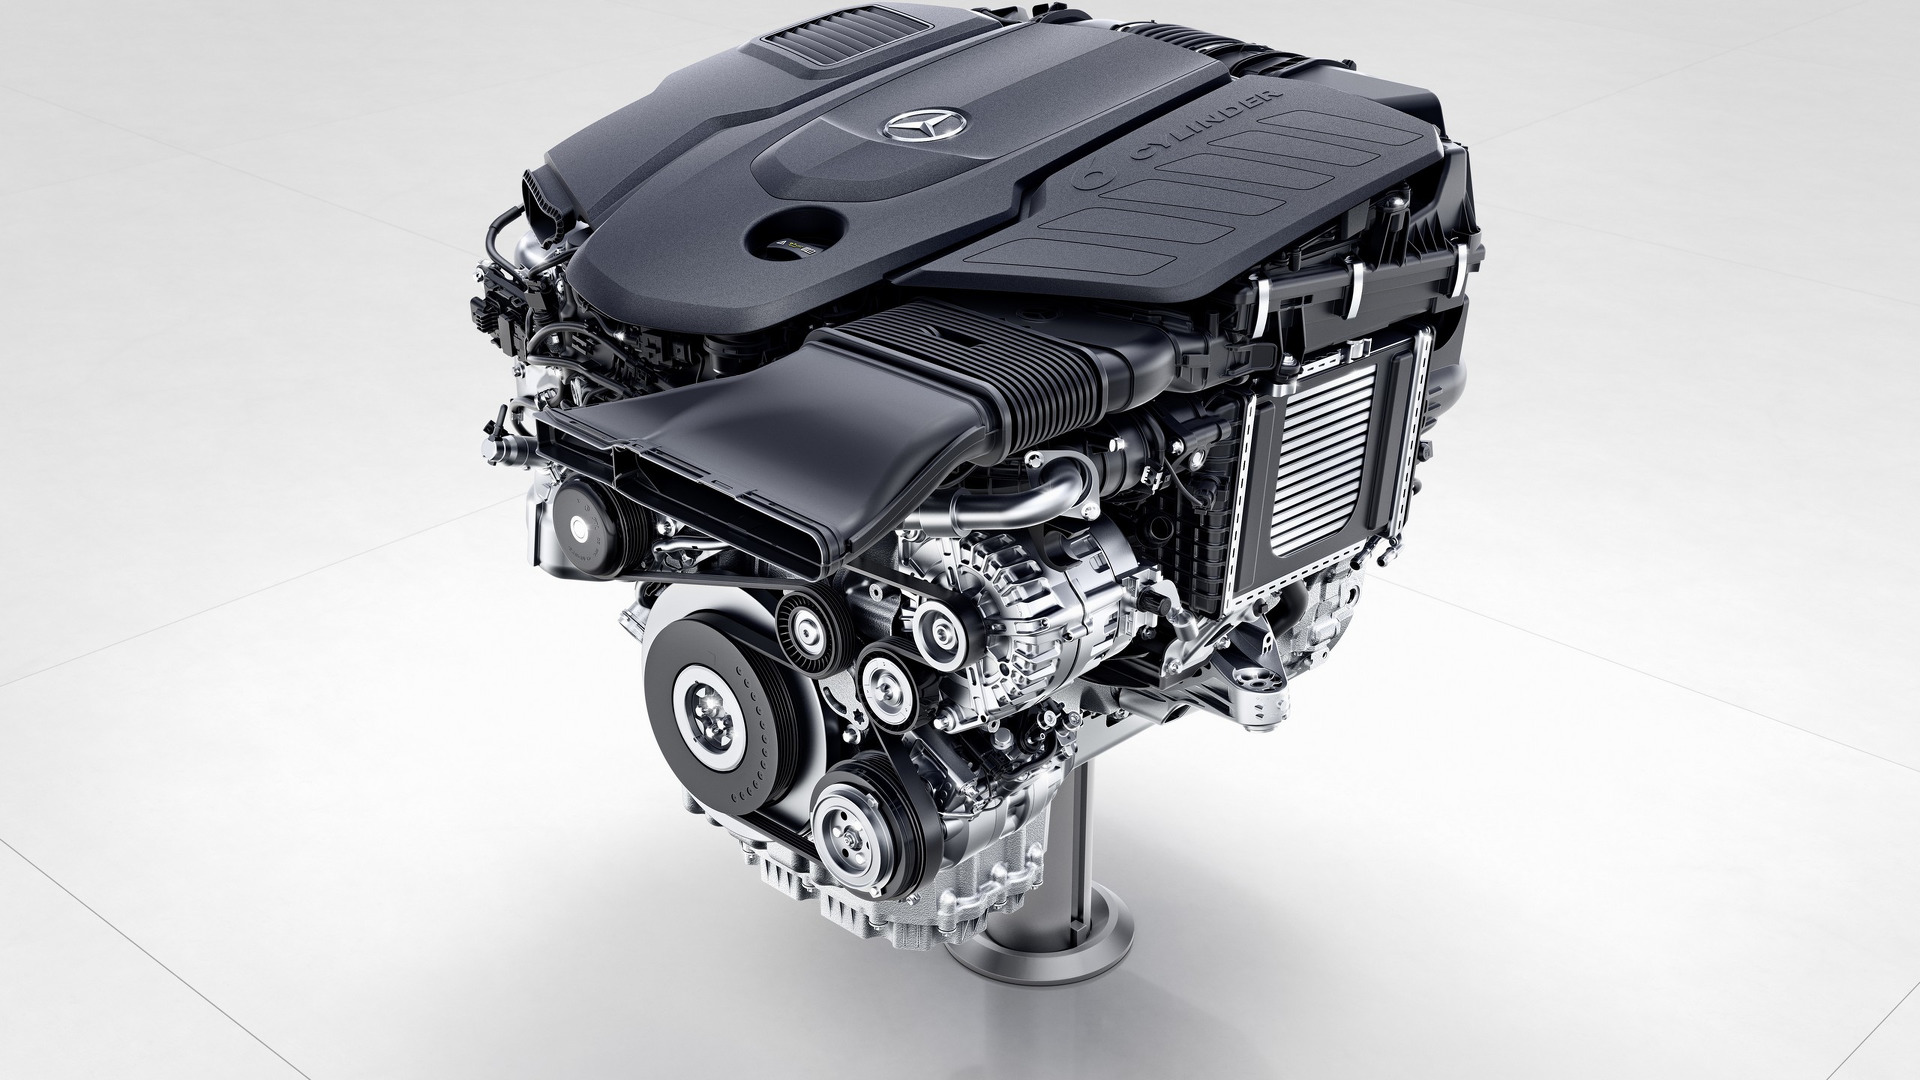 OM656柴油引擎，直列六缸柴油渦輪引擎動力，擁有313hp/66.3kgm的最大輸出